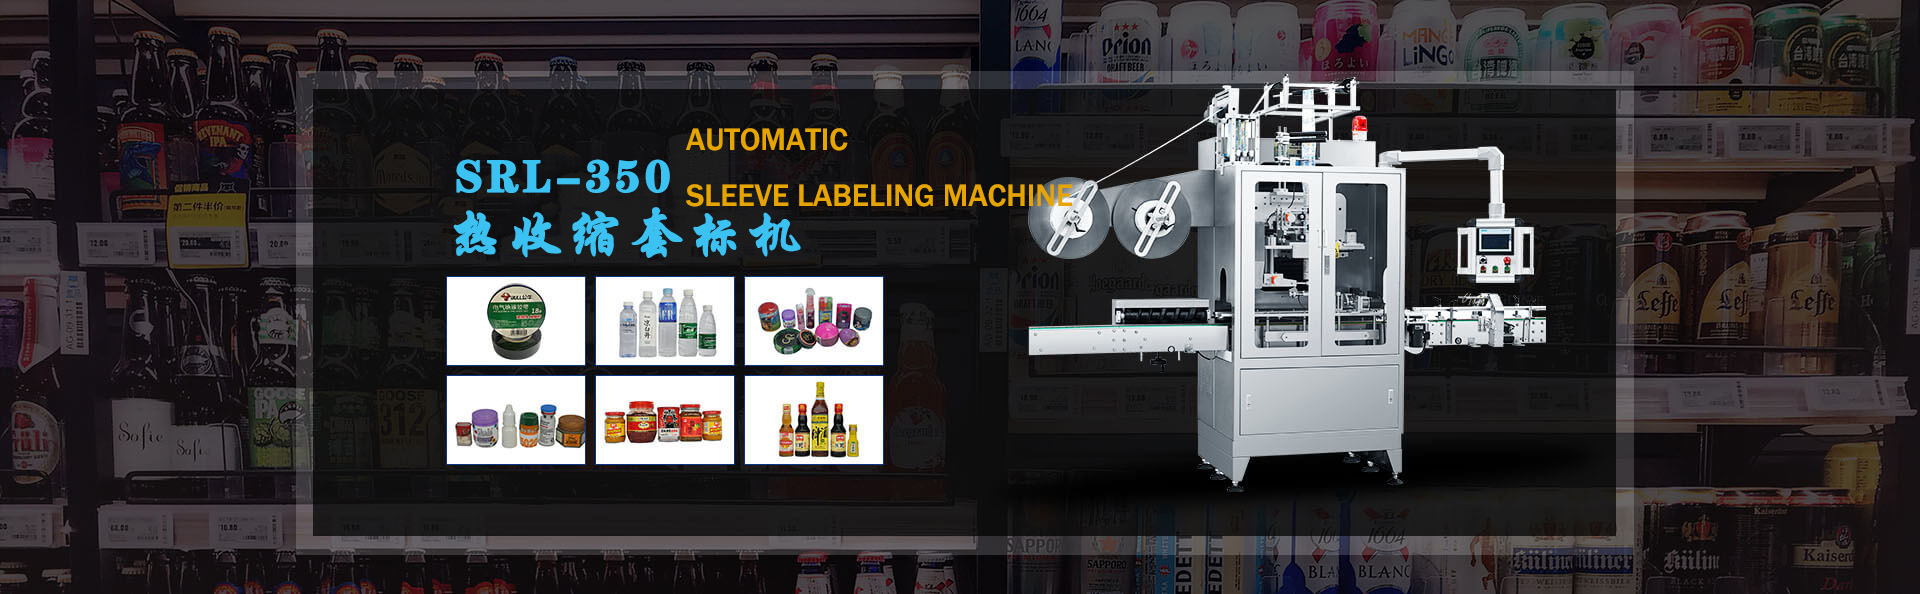 Automatic sleeve labeling machine